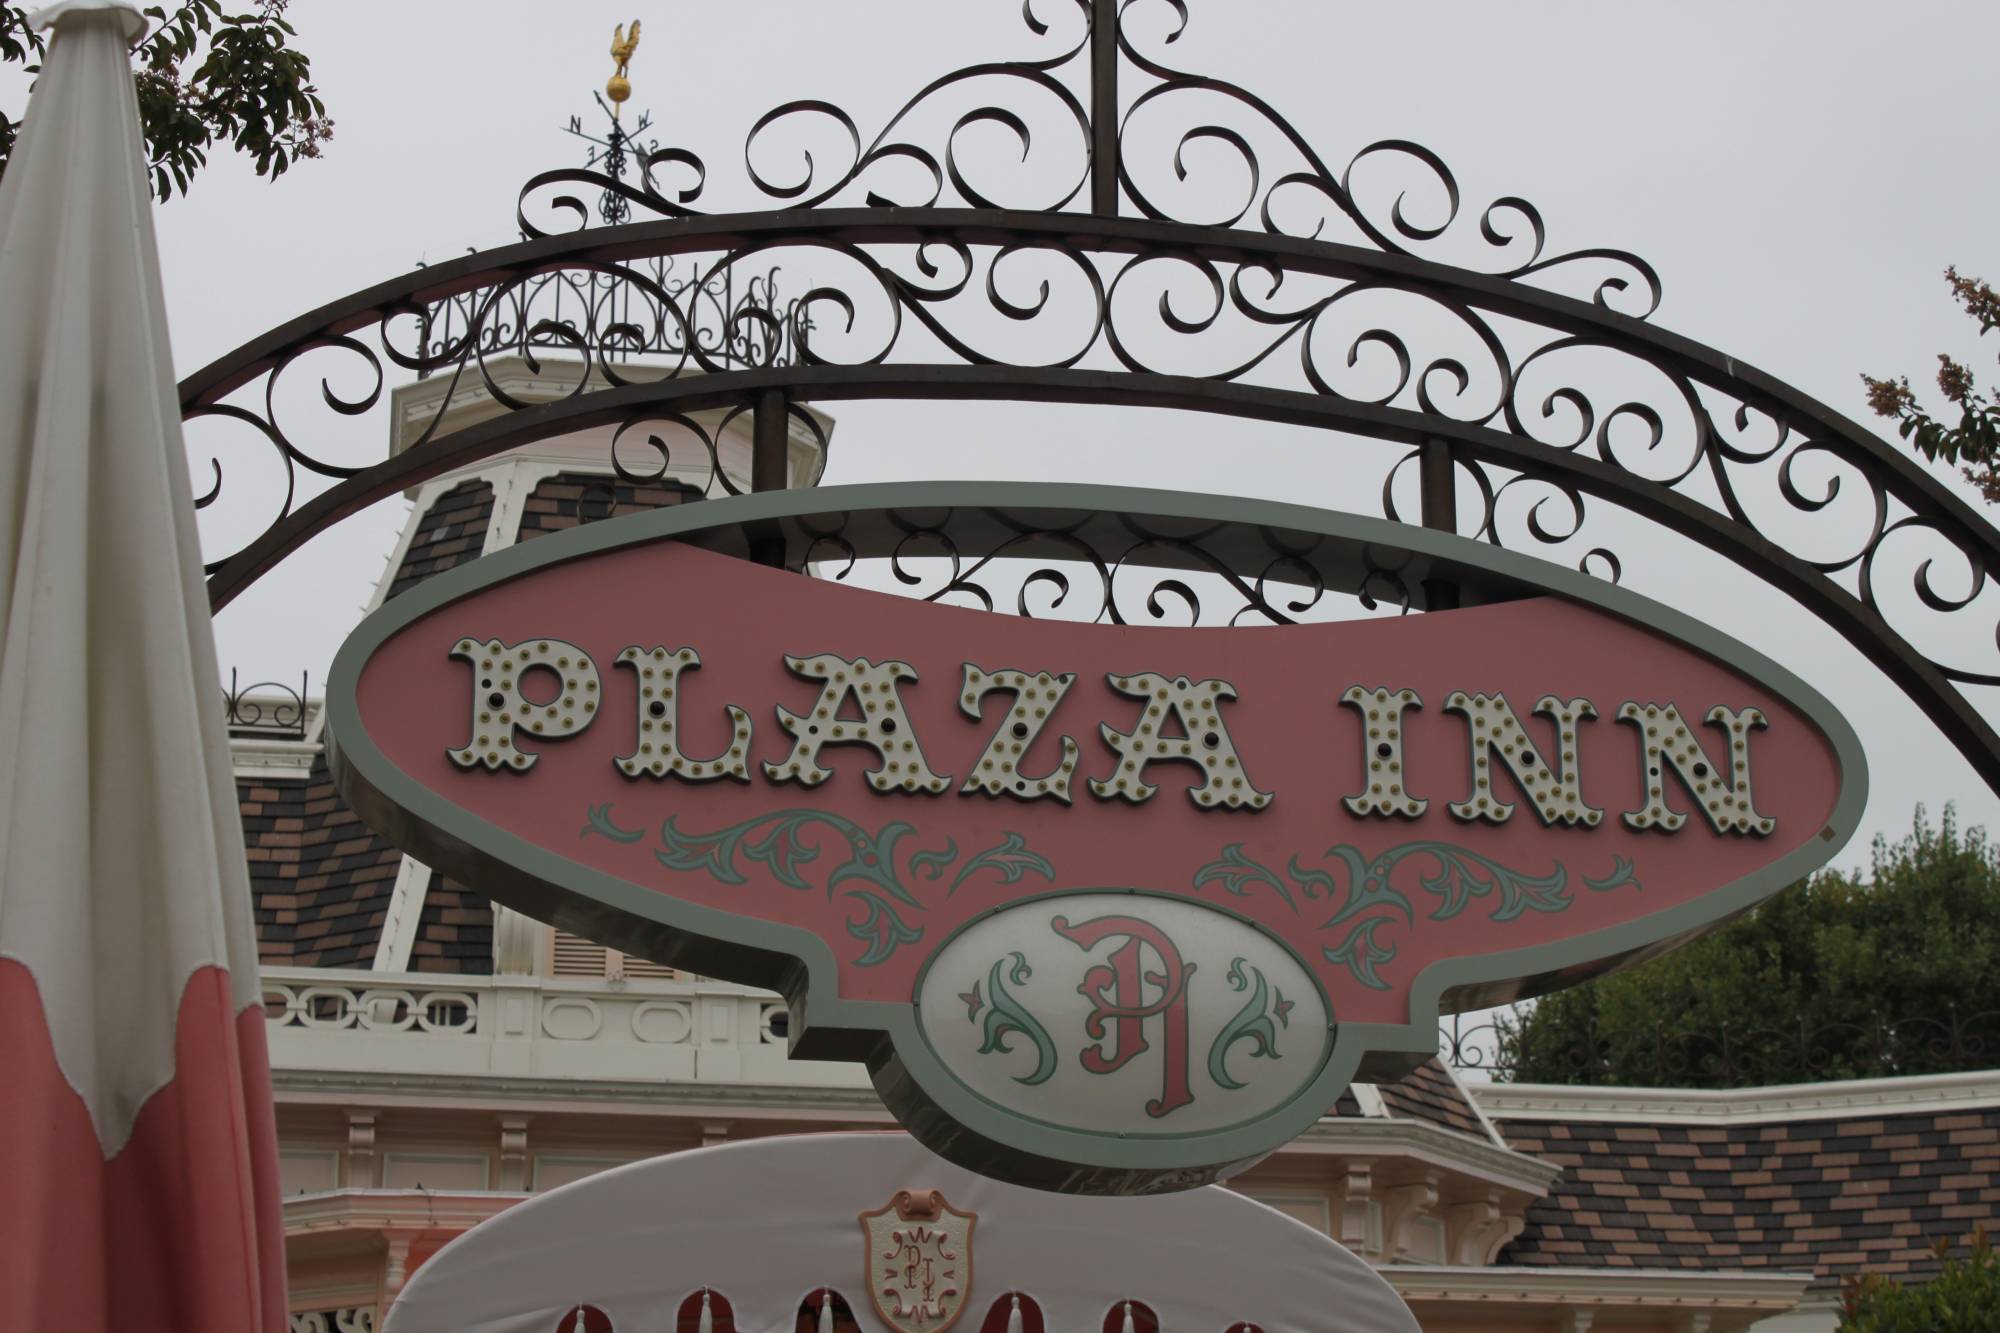 Disneyland - Plaza Inn sign